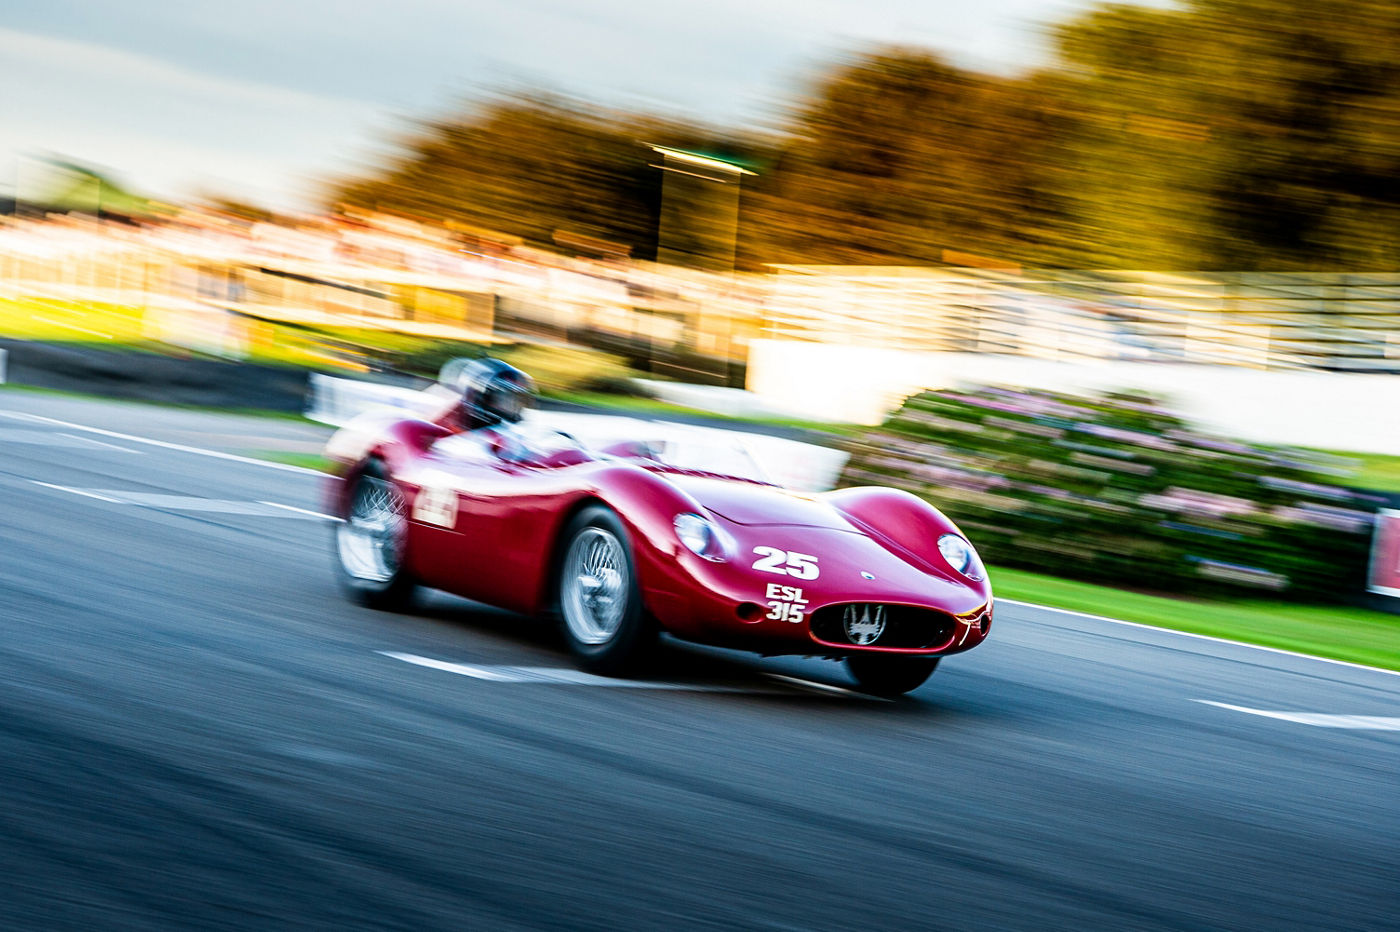 Modelo Maserati clásico 4PORTE durante el Goodwood Festival of Speed